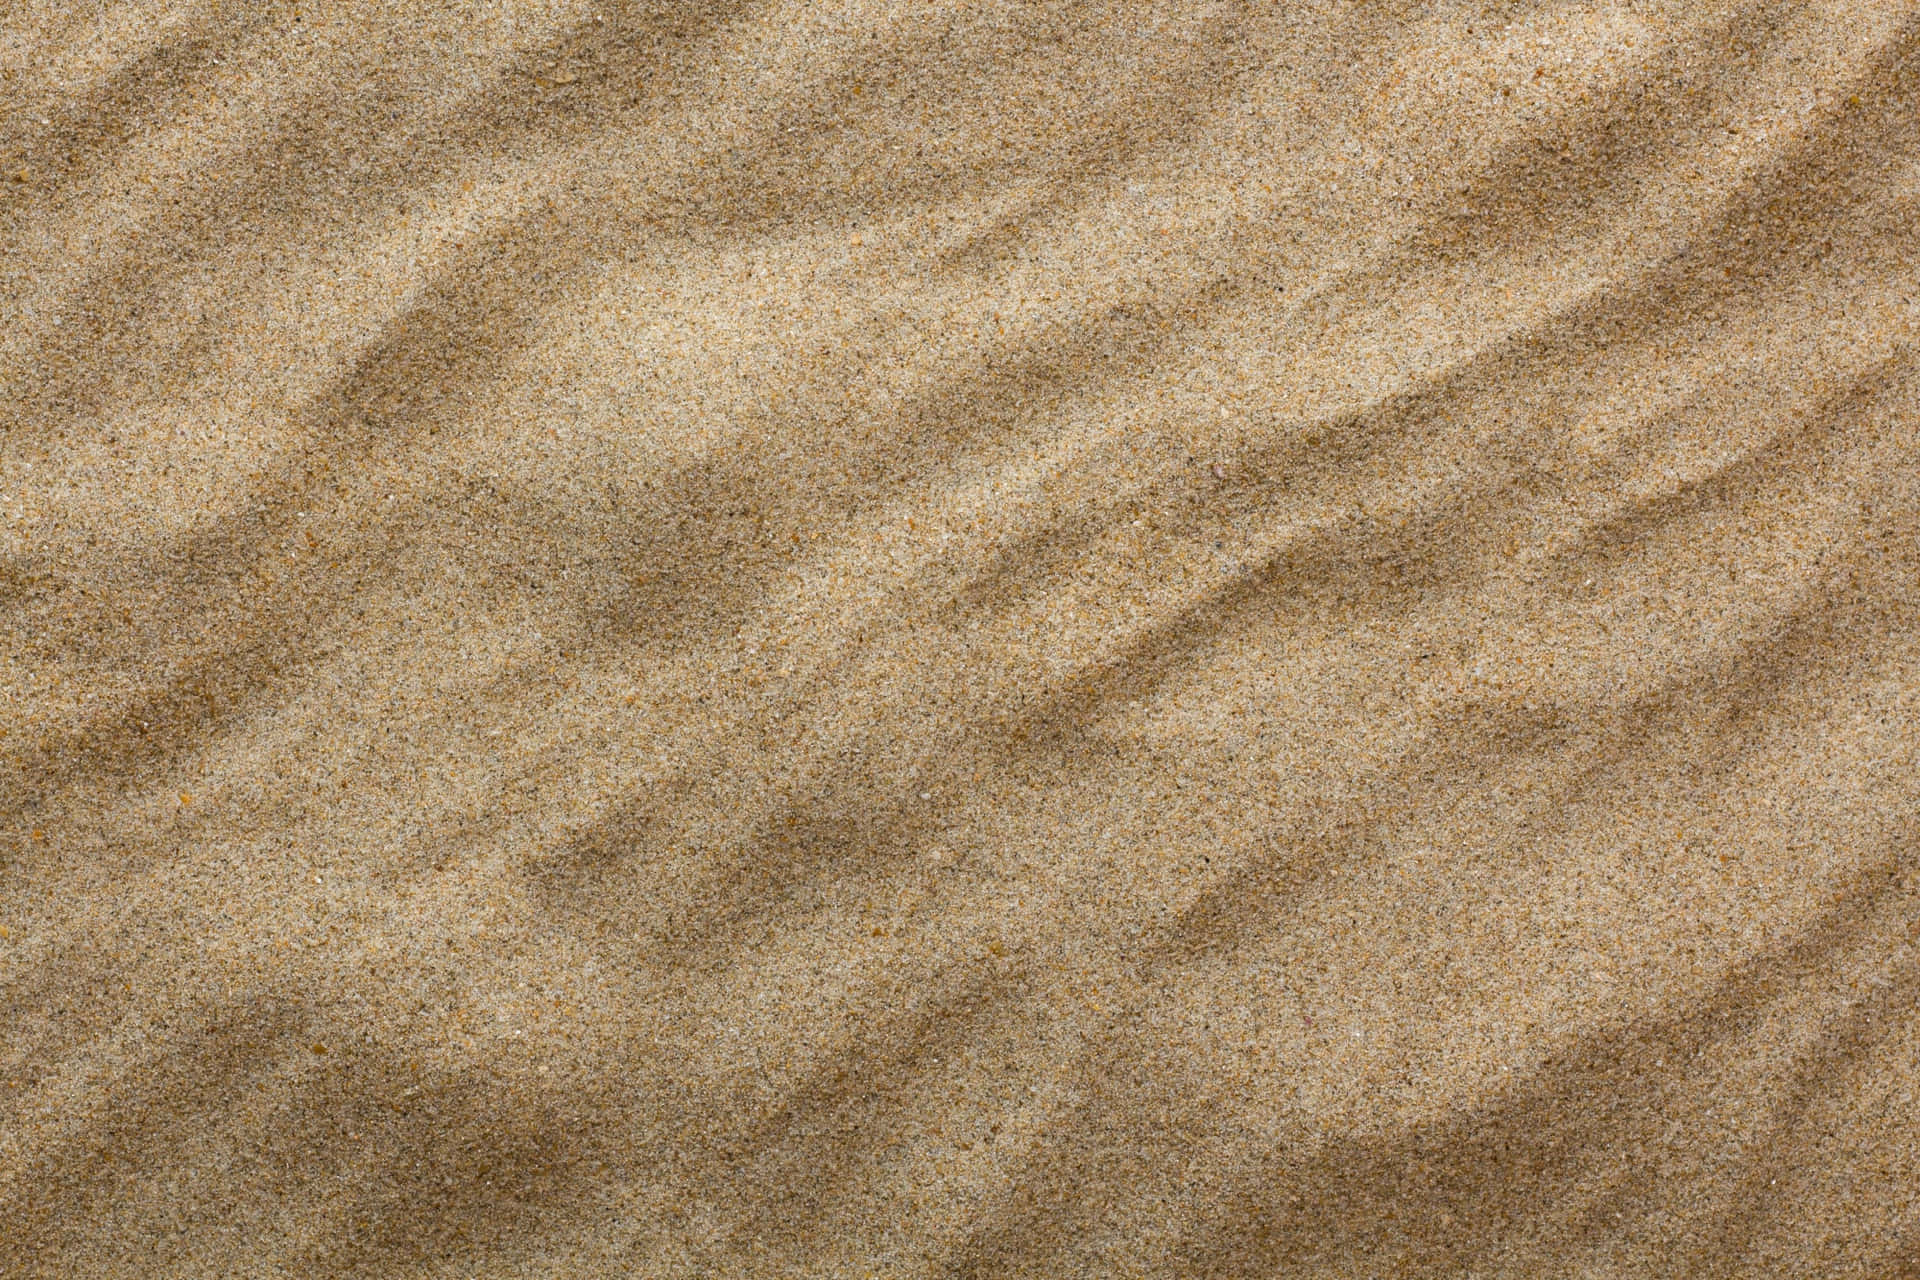 Sand 2000 X 1333 Wallpaper